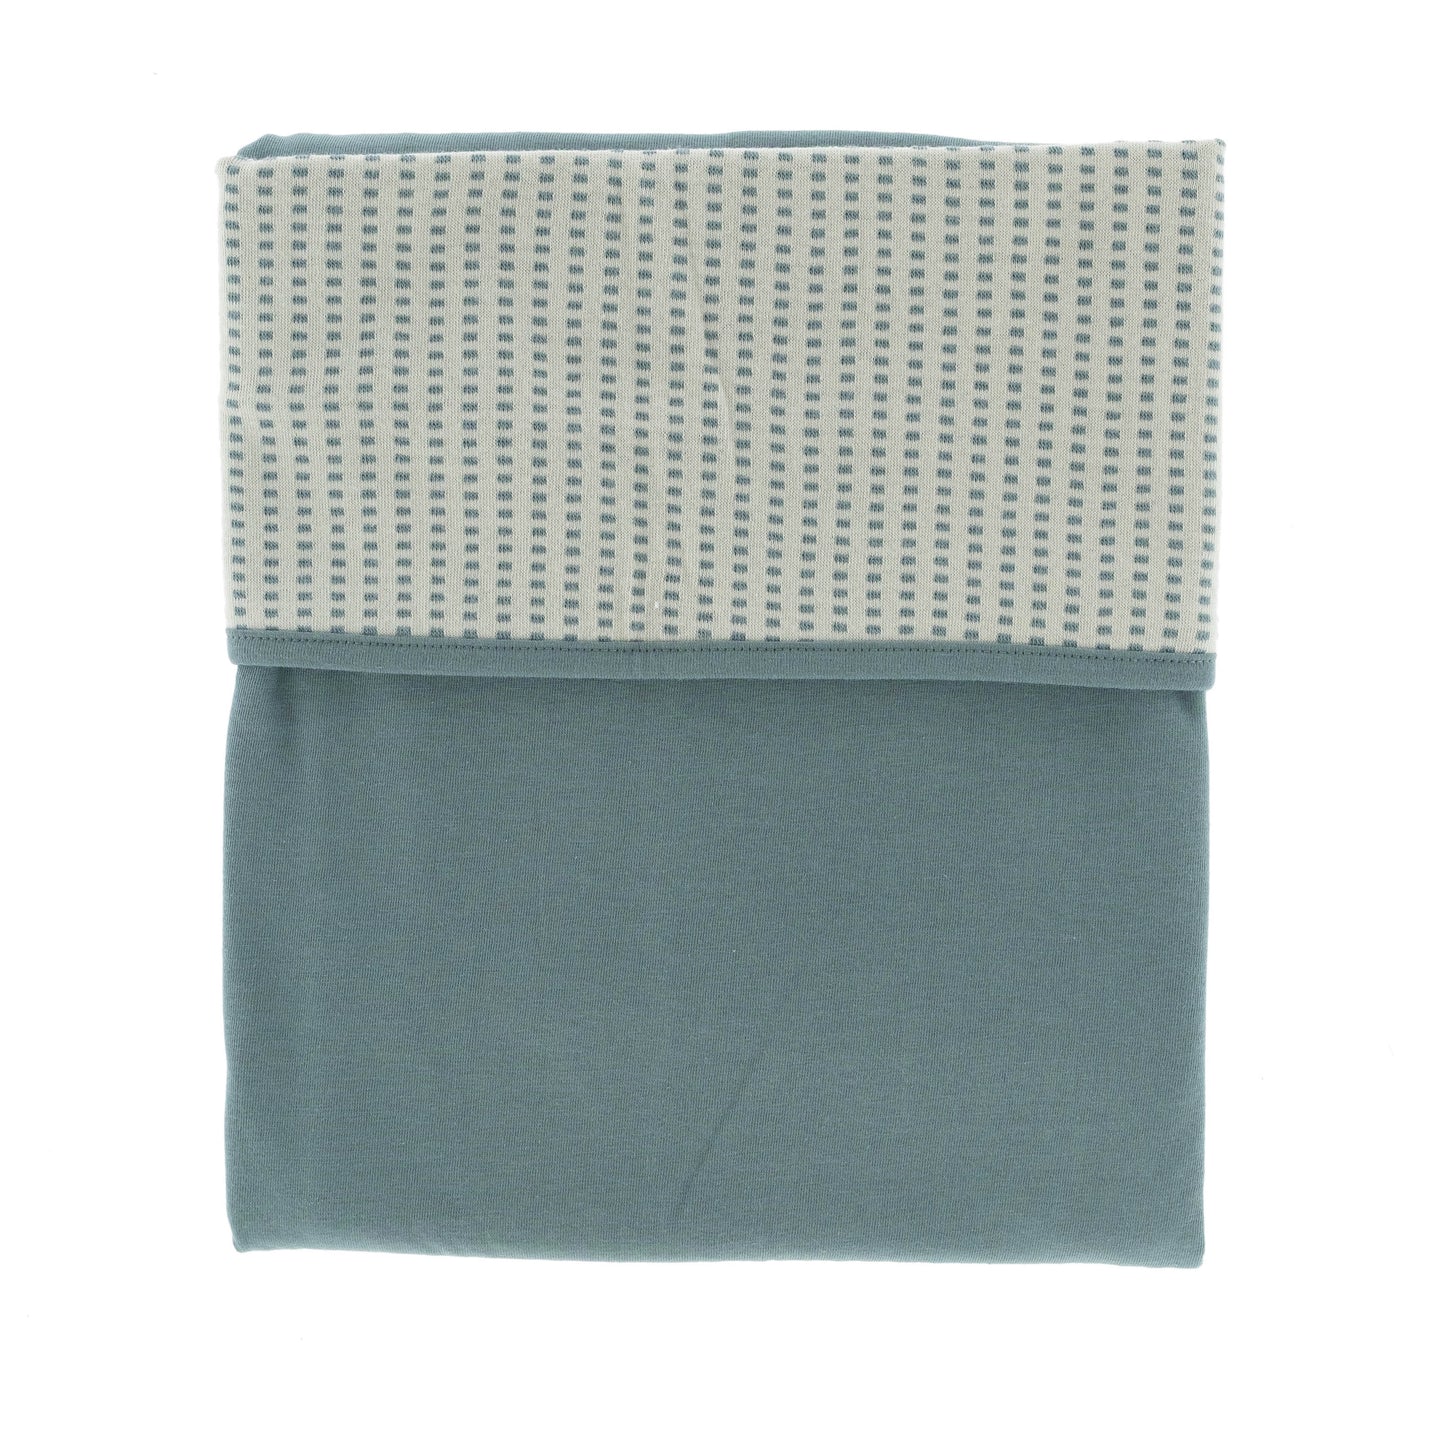 ORGANIC Blanket cot T.O.G. 1.0 Smokey Green